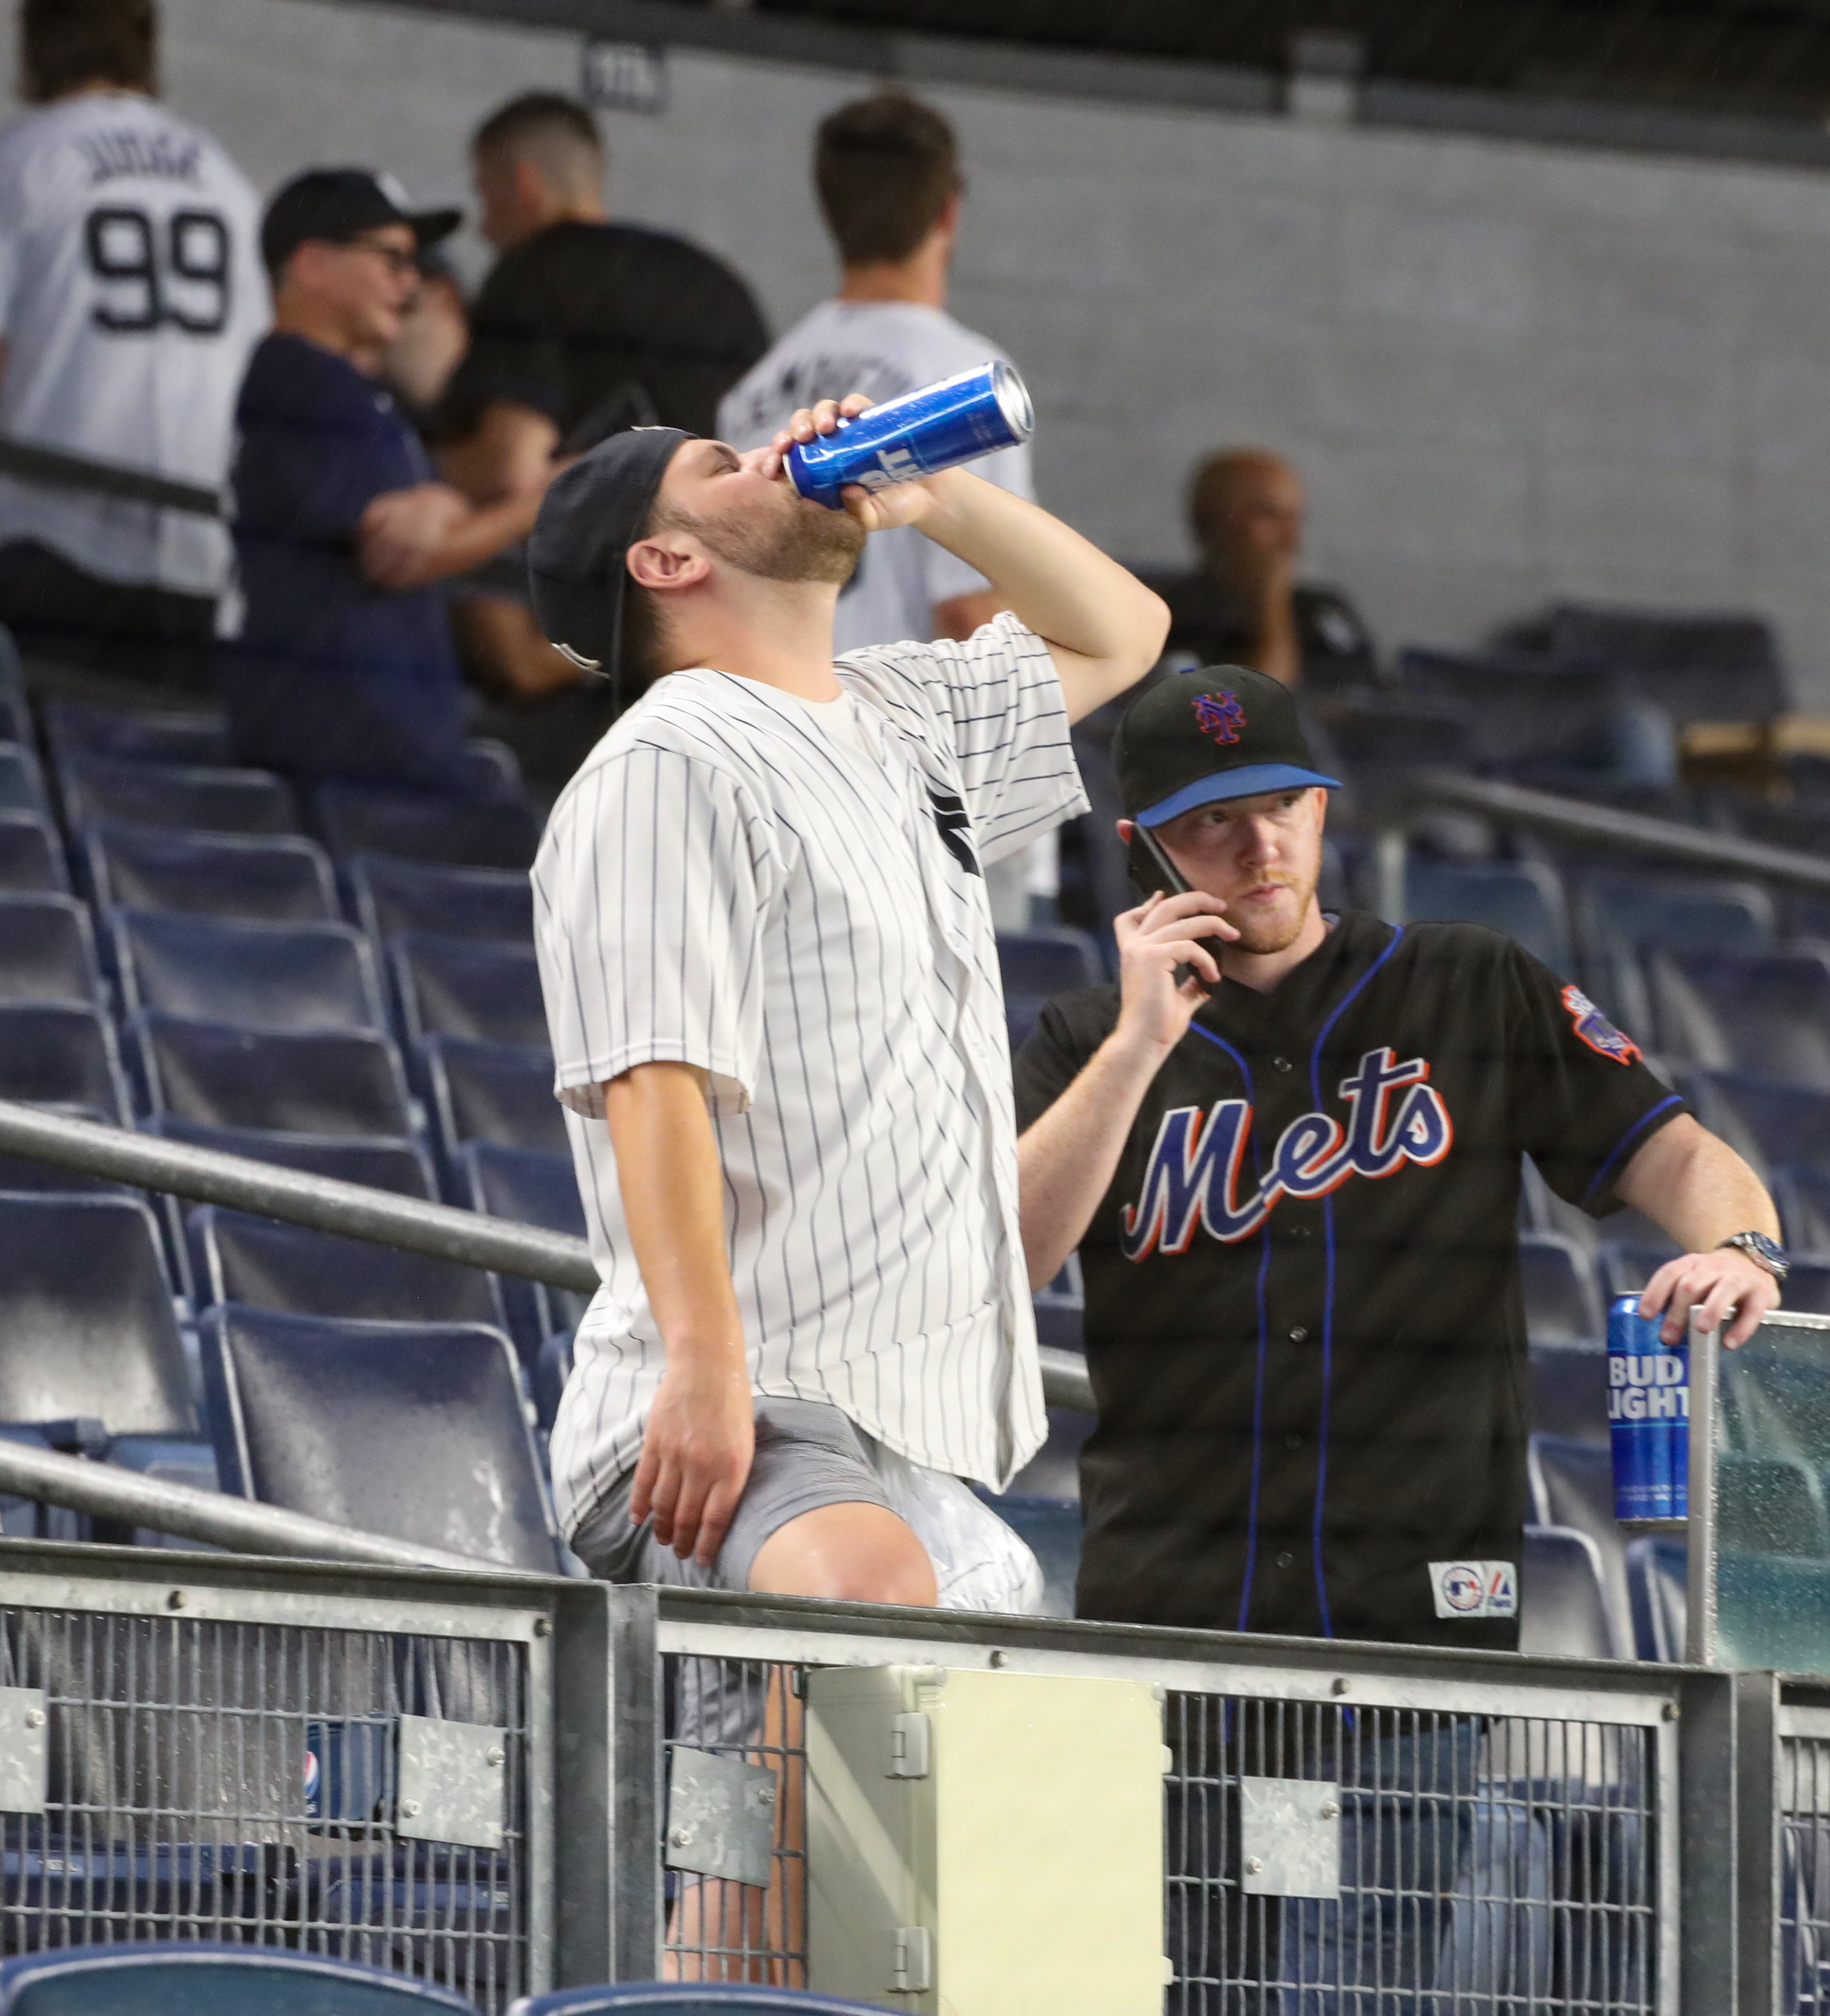 NY Mets, New York Yankees' Subway Series opener postponed due to rain